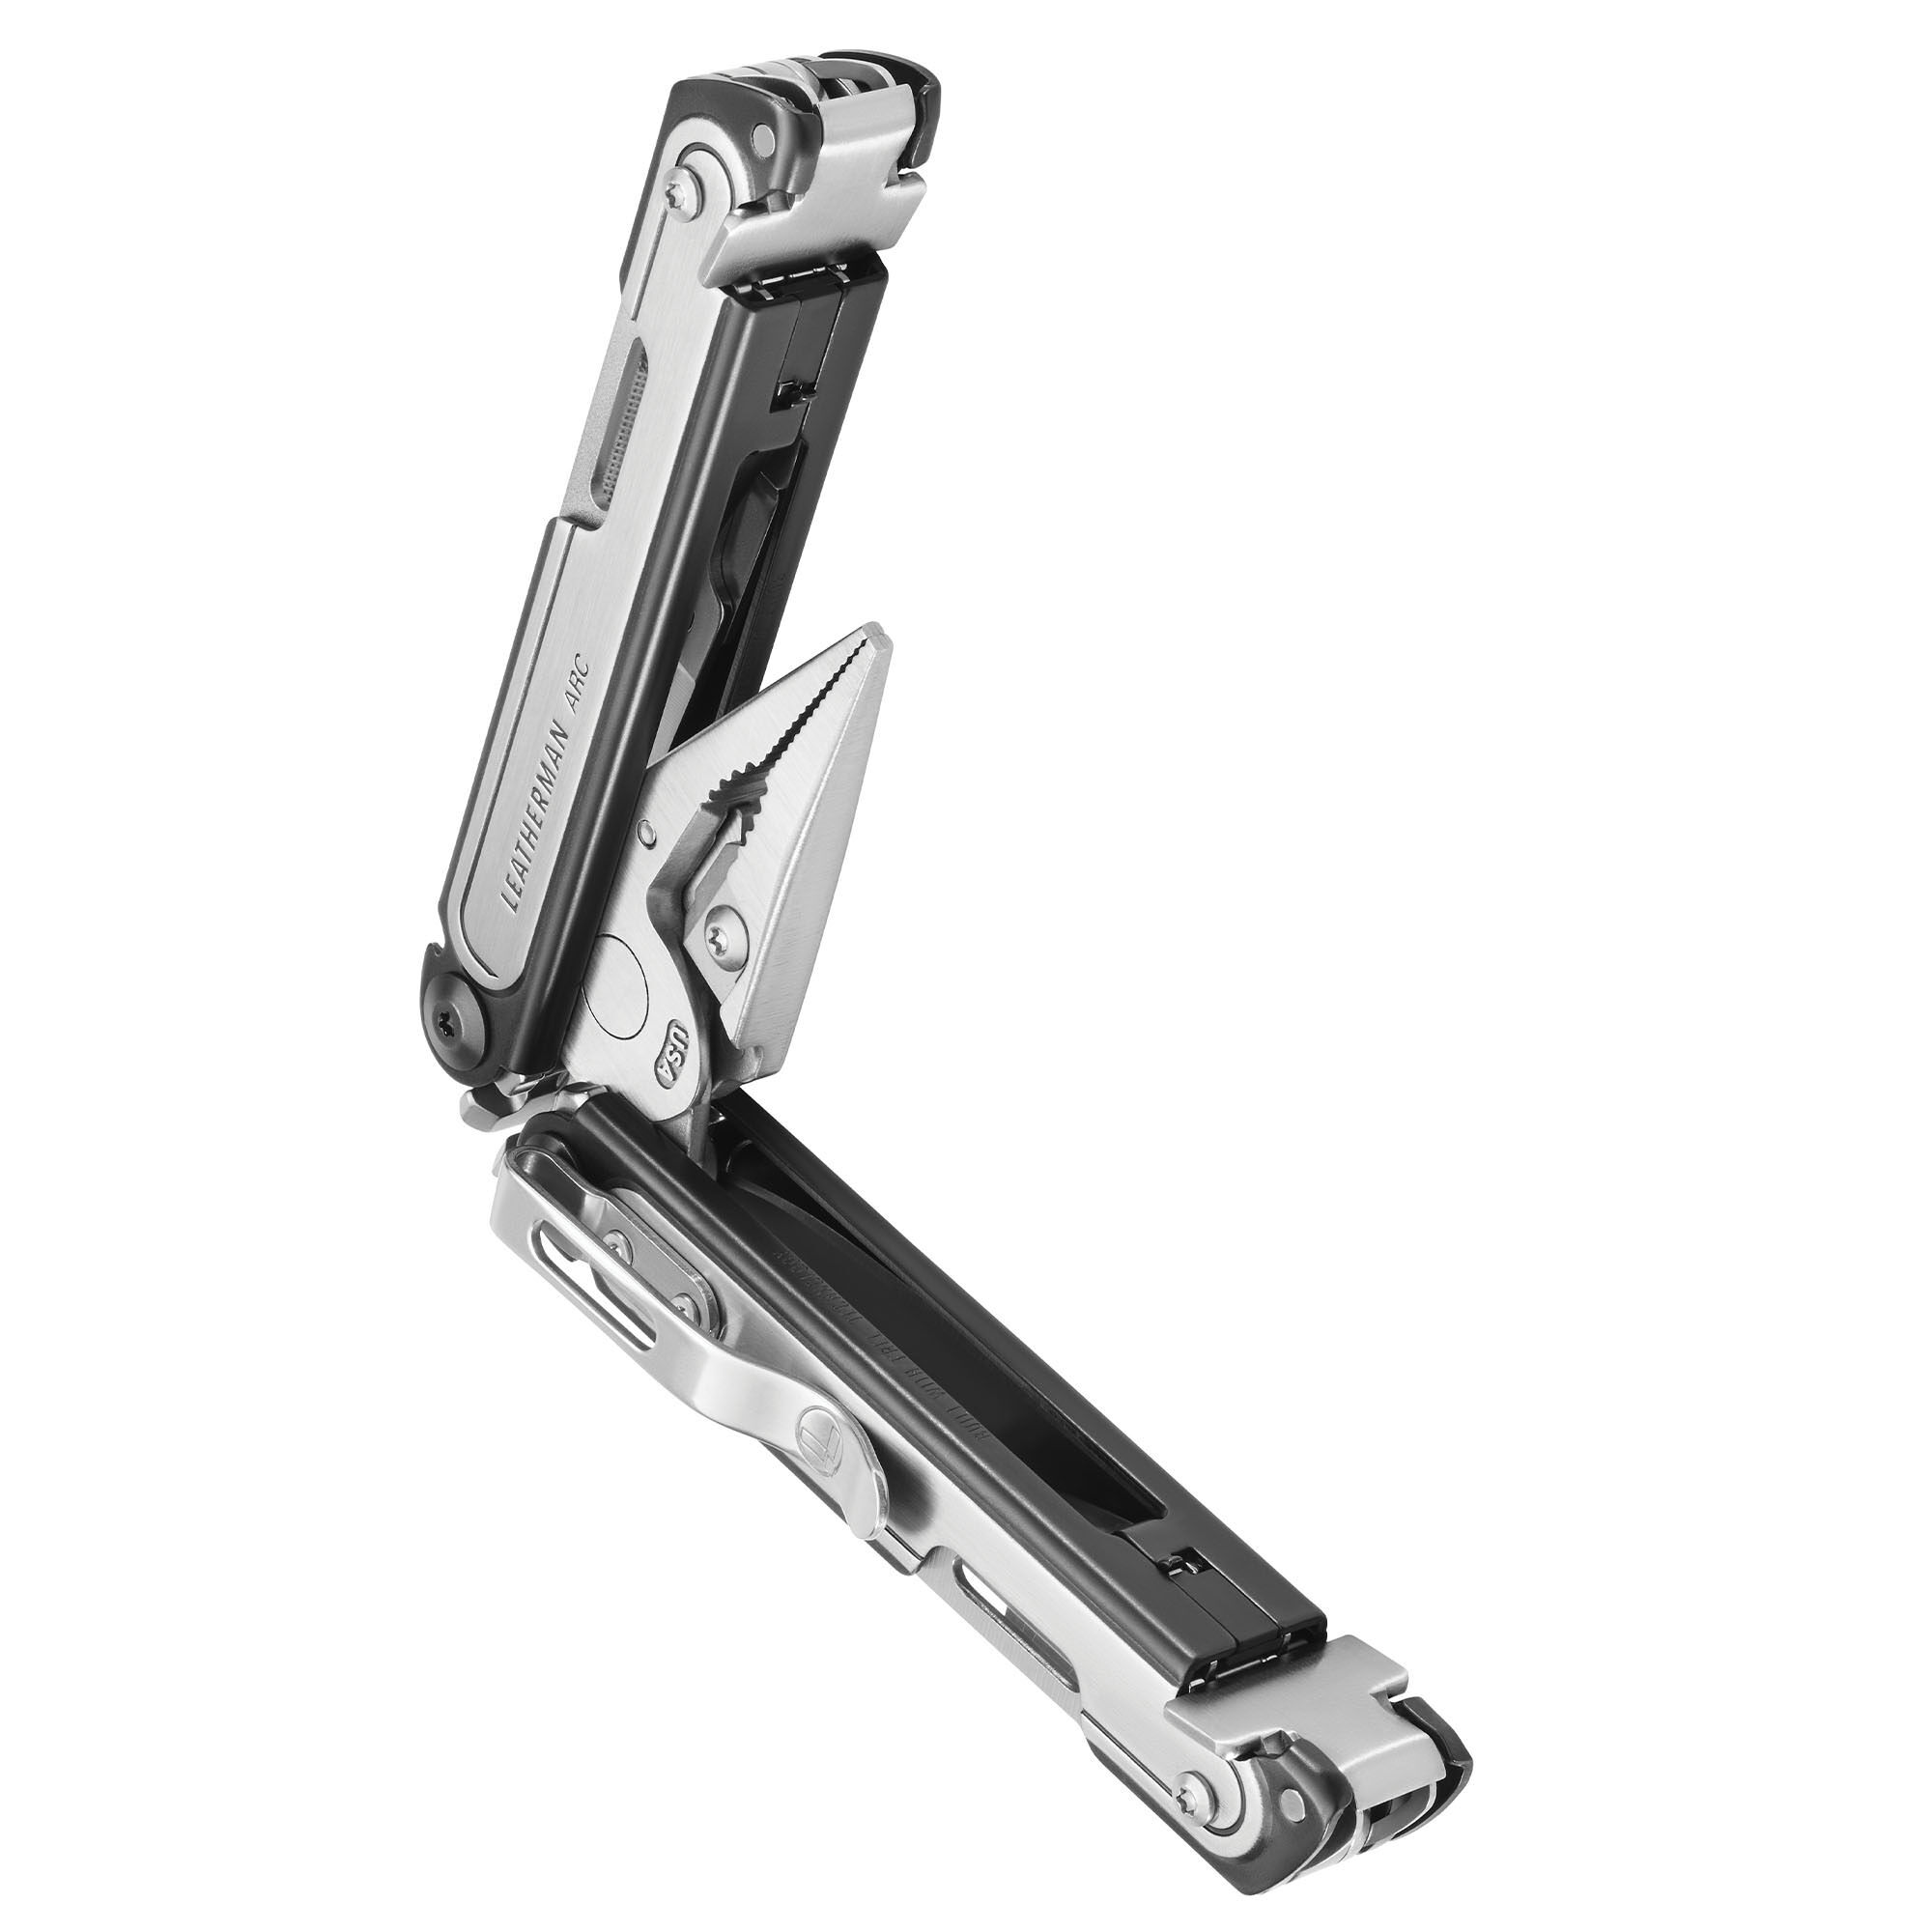 Leatherman ARC sheath - by RAE GEAR - adjustable/rotatable belt clip 